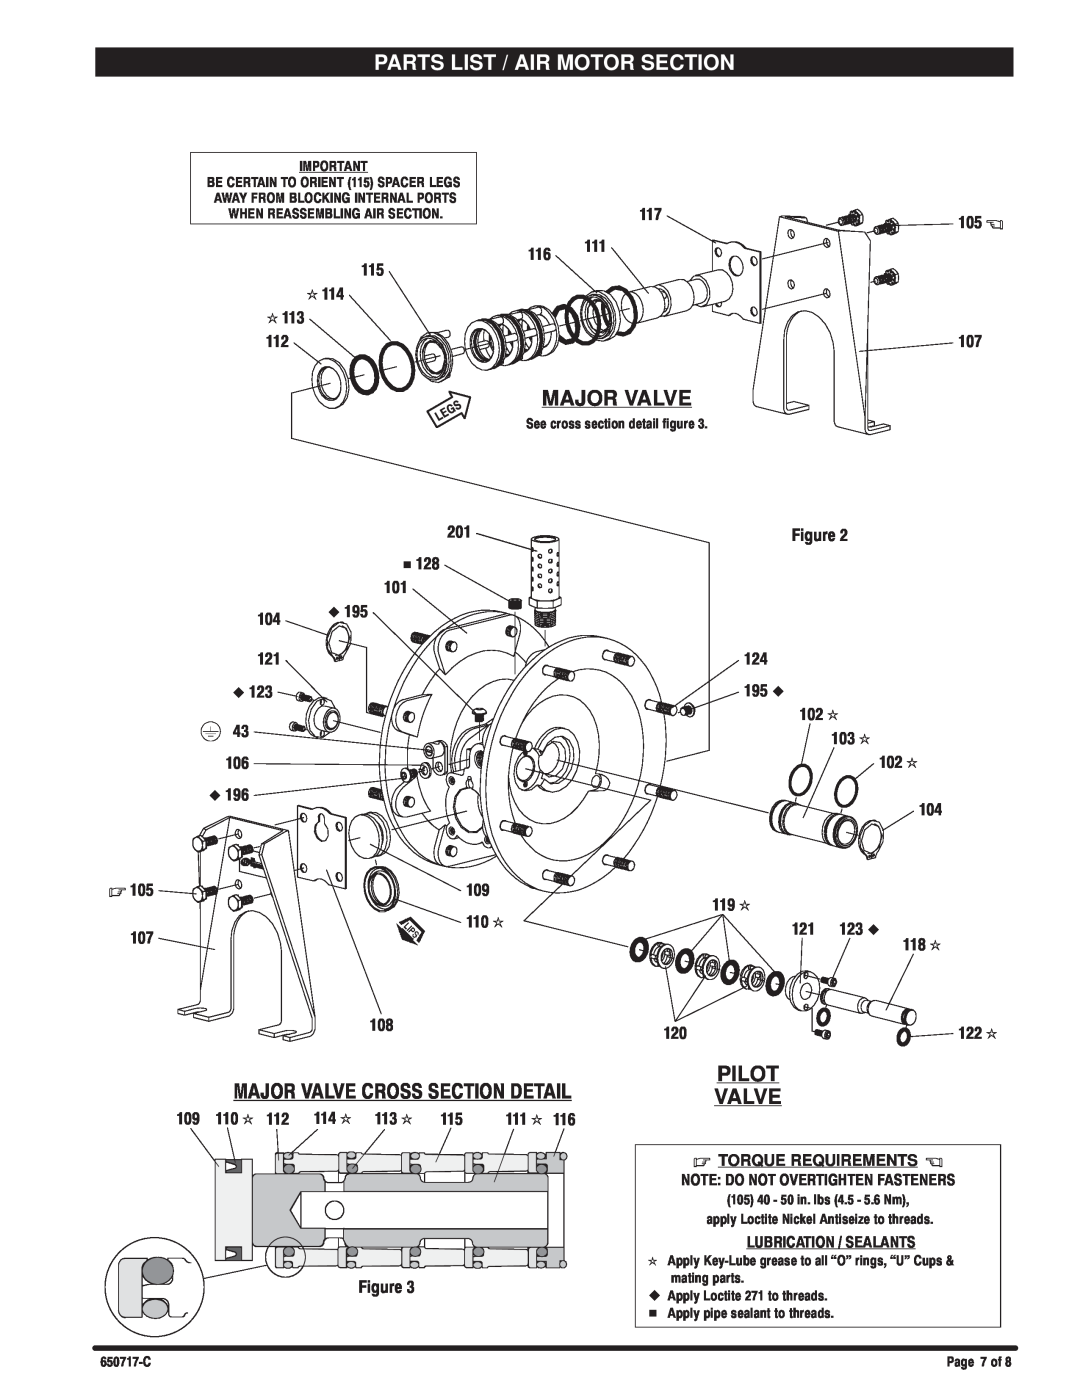 Ingersoll-Rand 650717-C manual Major Valve, Pilot Valve, k k k, Torque Requirements, k z H, Parts List / Air Motor Section 